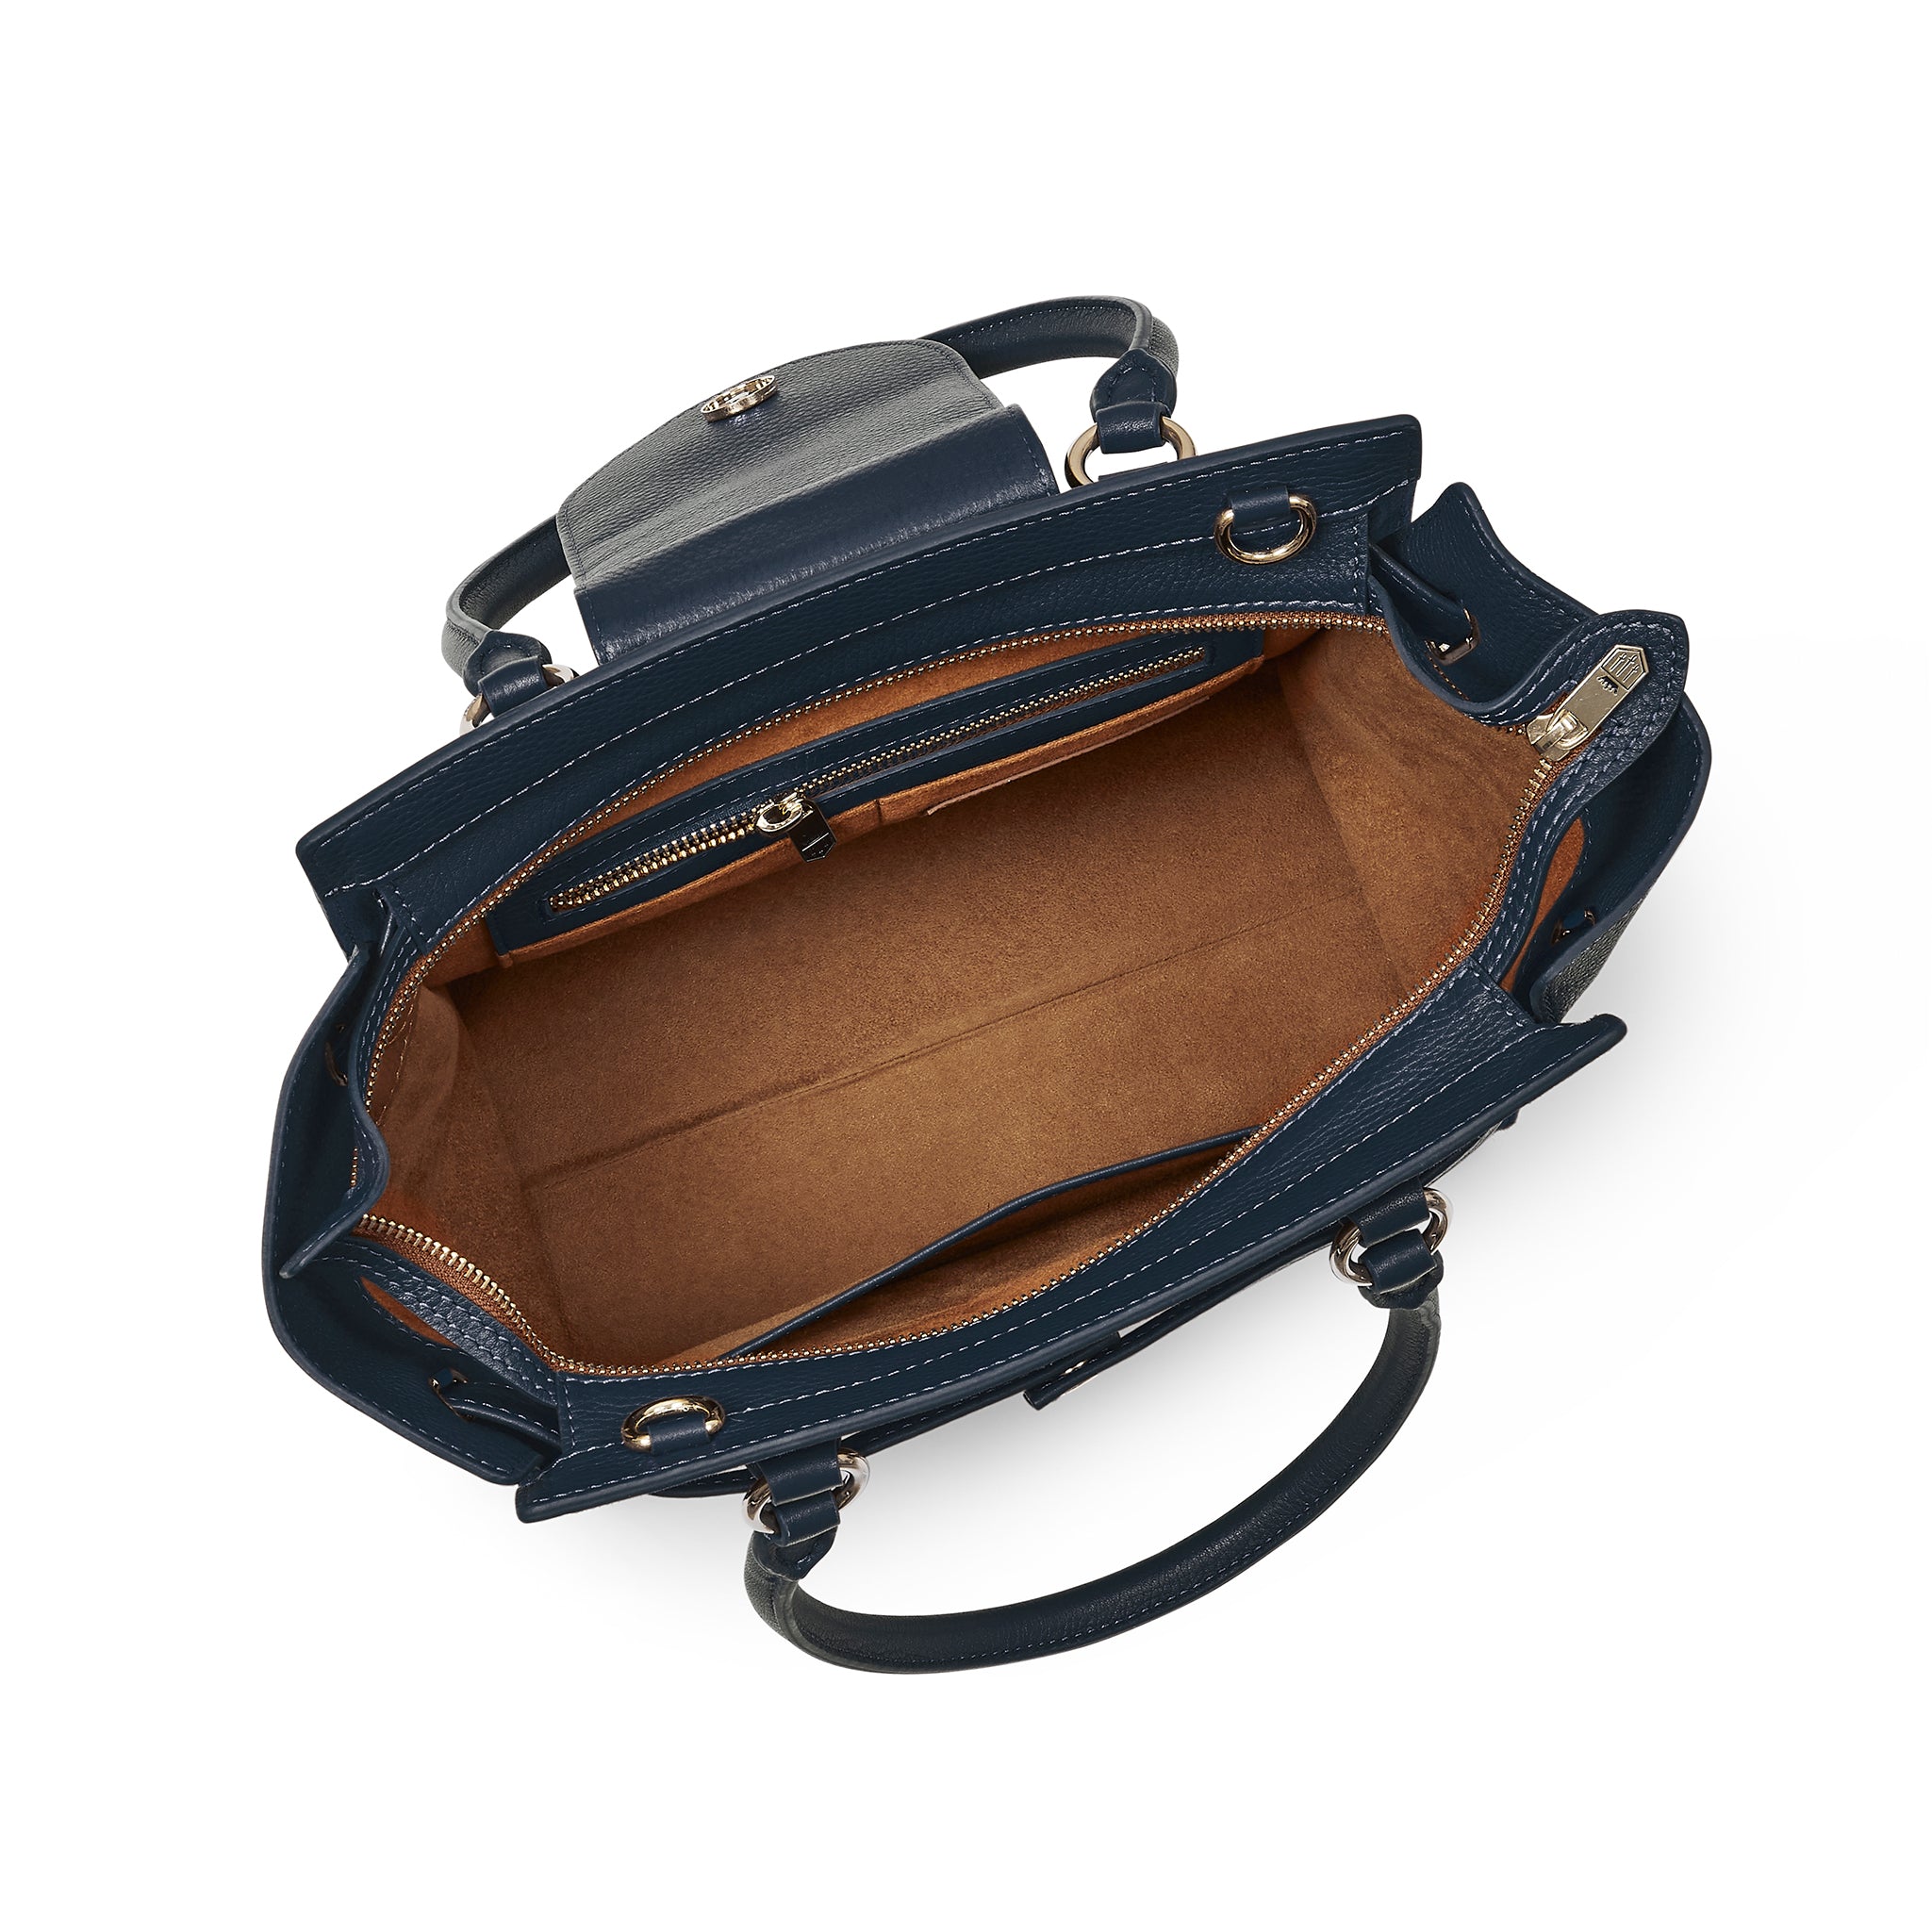 Fairfax & Favor Windsor Tote Handbag - Tan/Navy